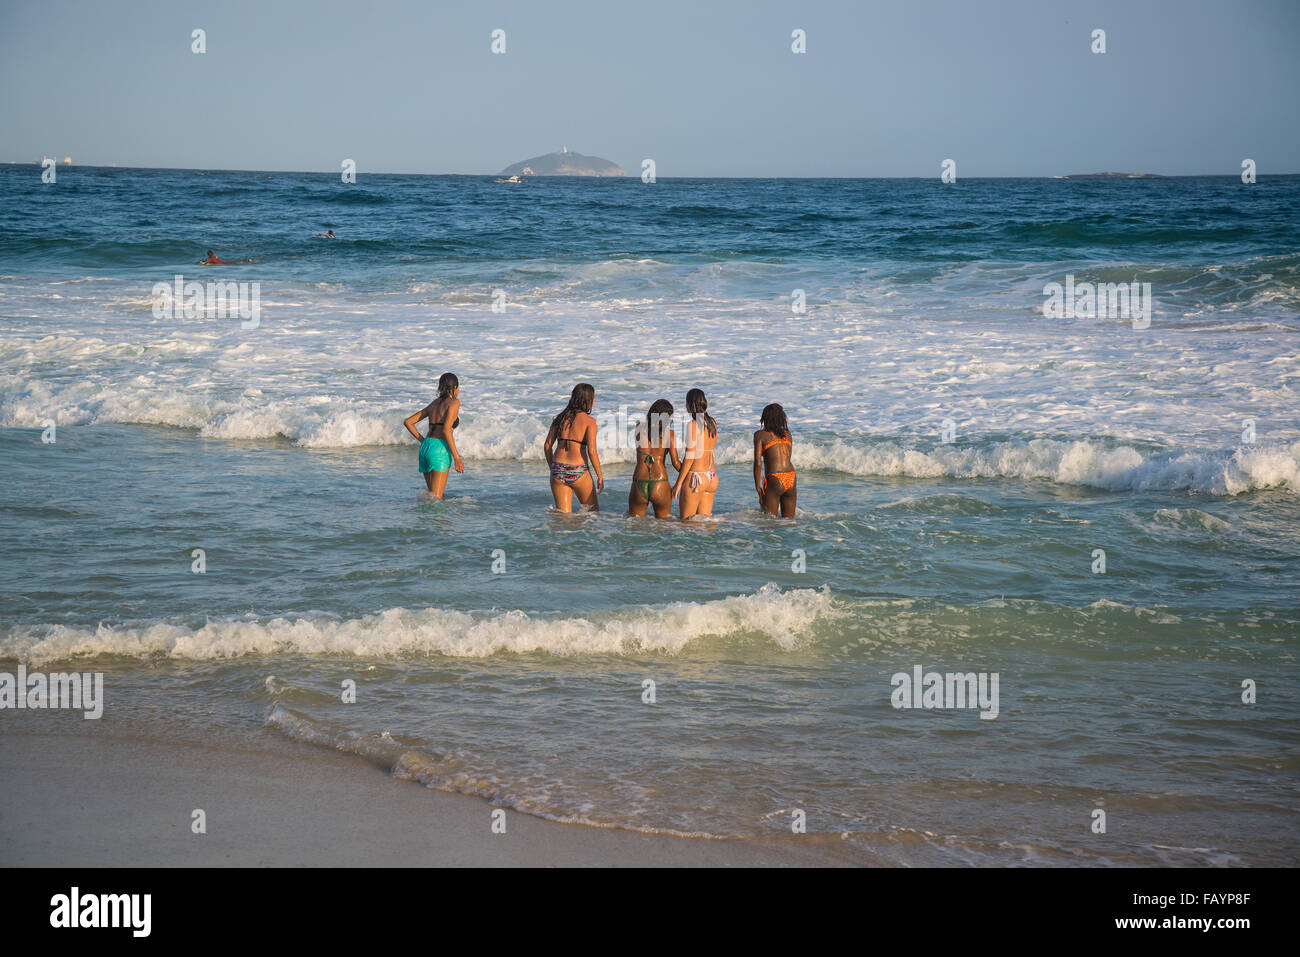 Rio De Janeiro Beach Girls Fotos Und Bildmaterial In Hoher Aufl Sung